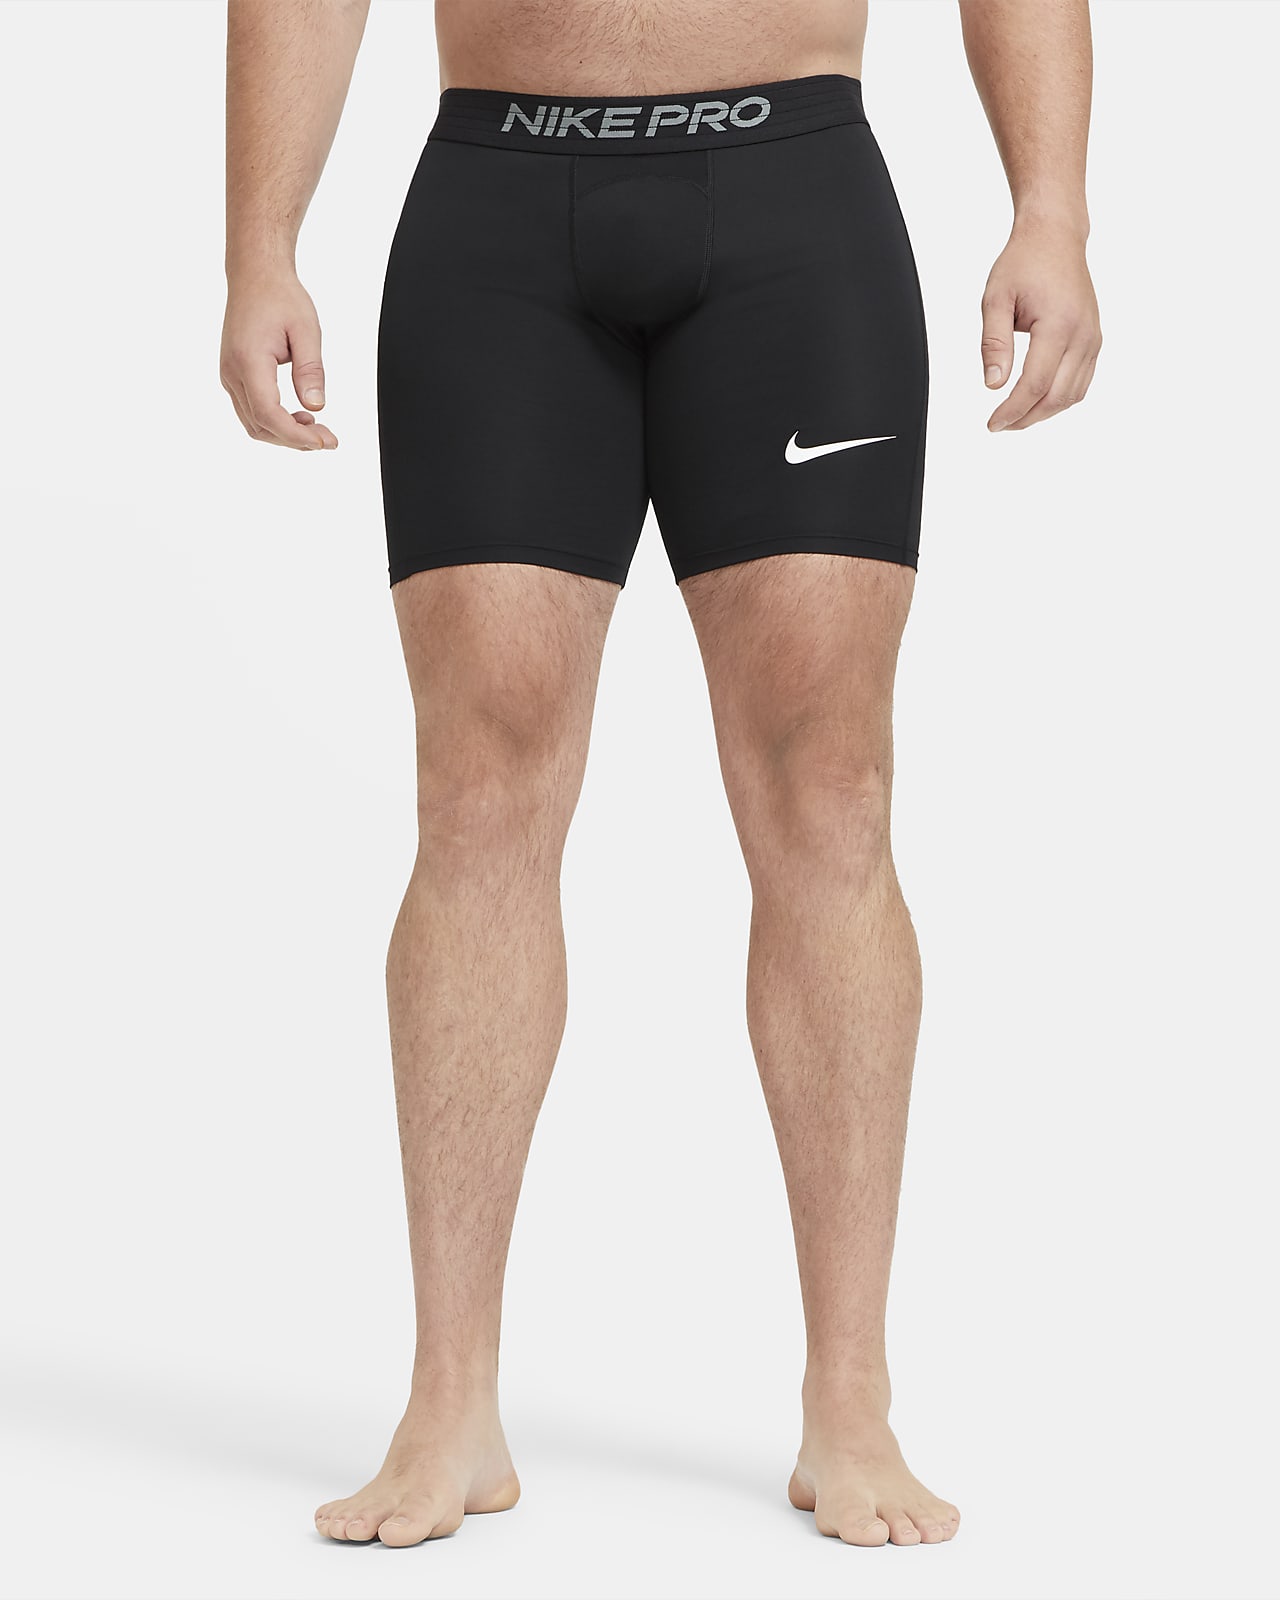 nike compression shorts men